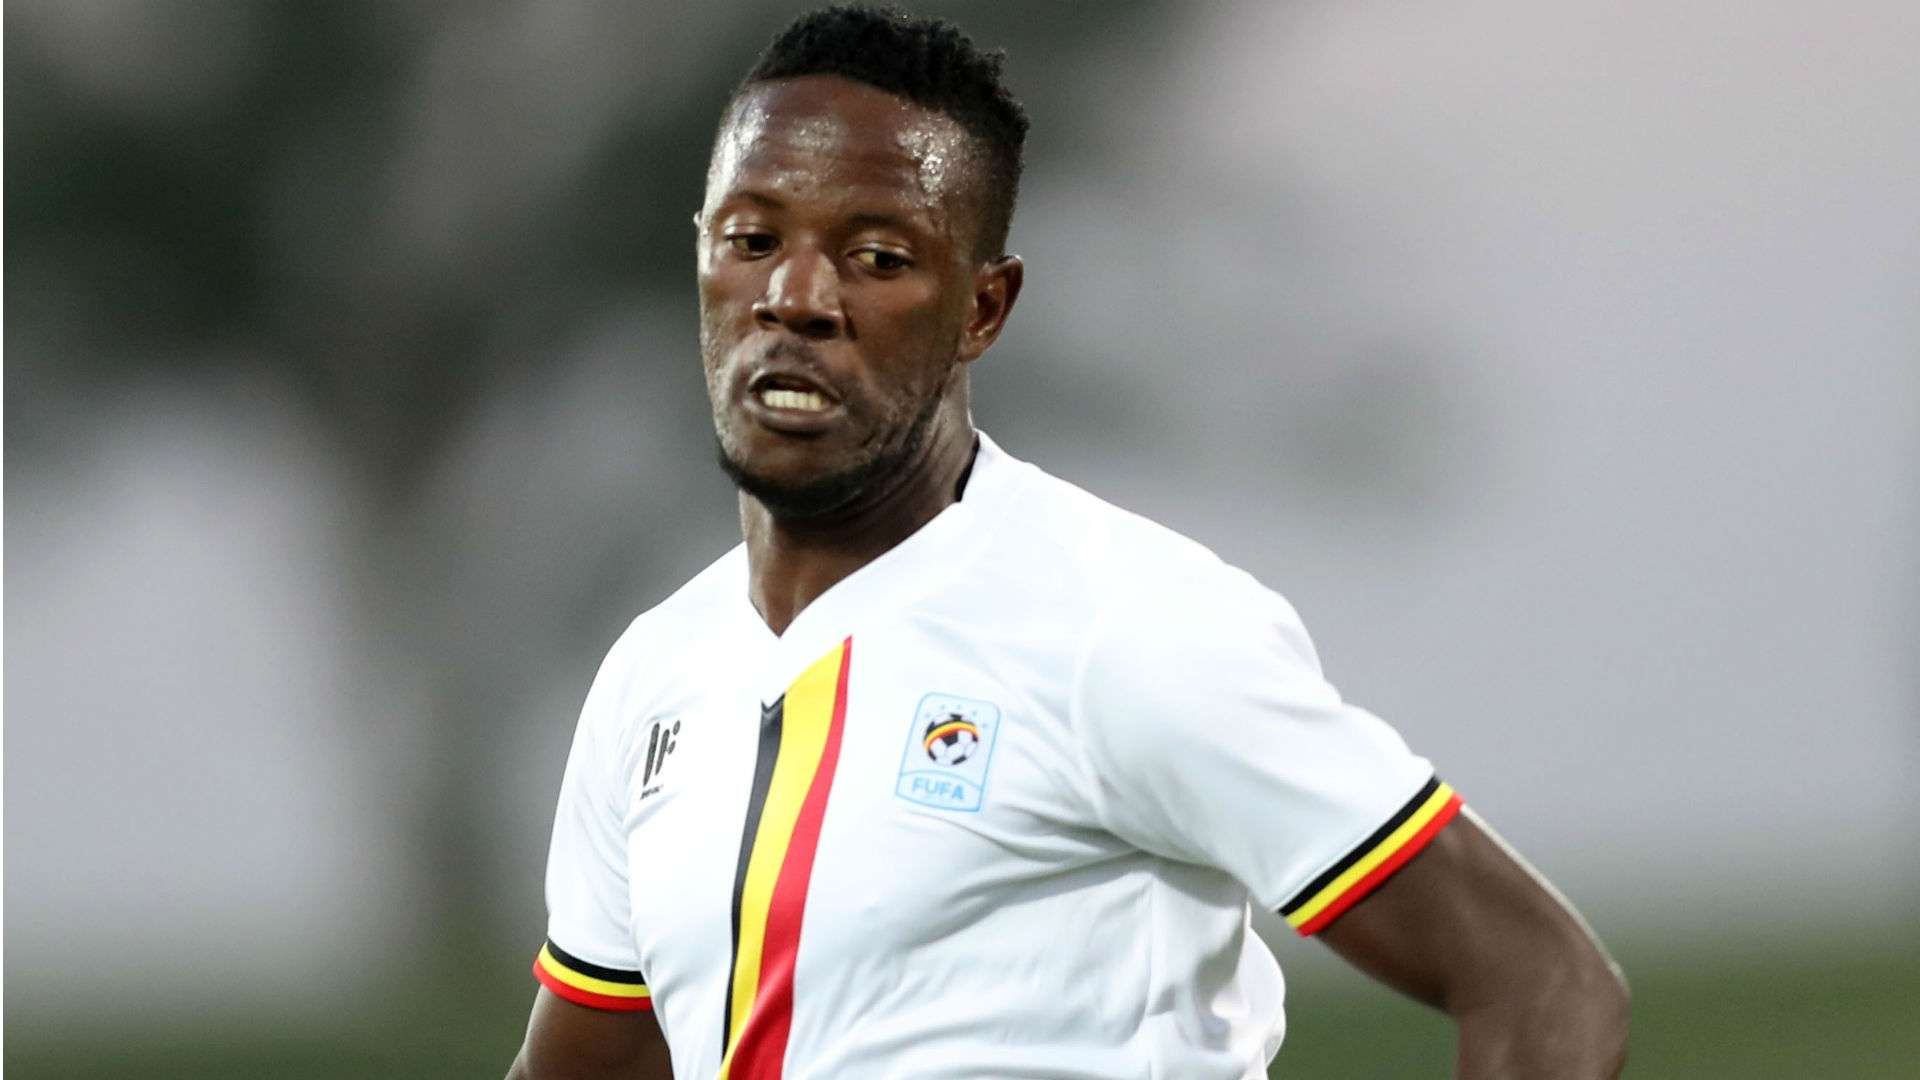 Juma Balinya of Uganda during the 2019 Cosafa Cup match between South Africa and Uganda.